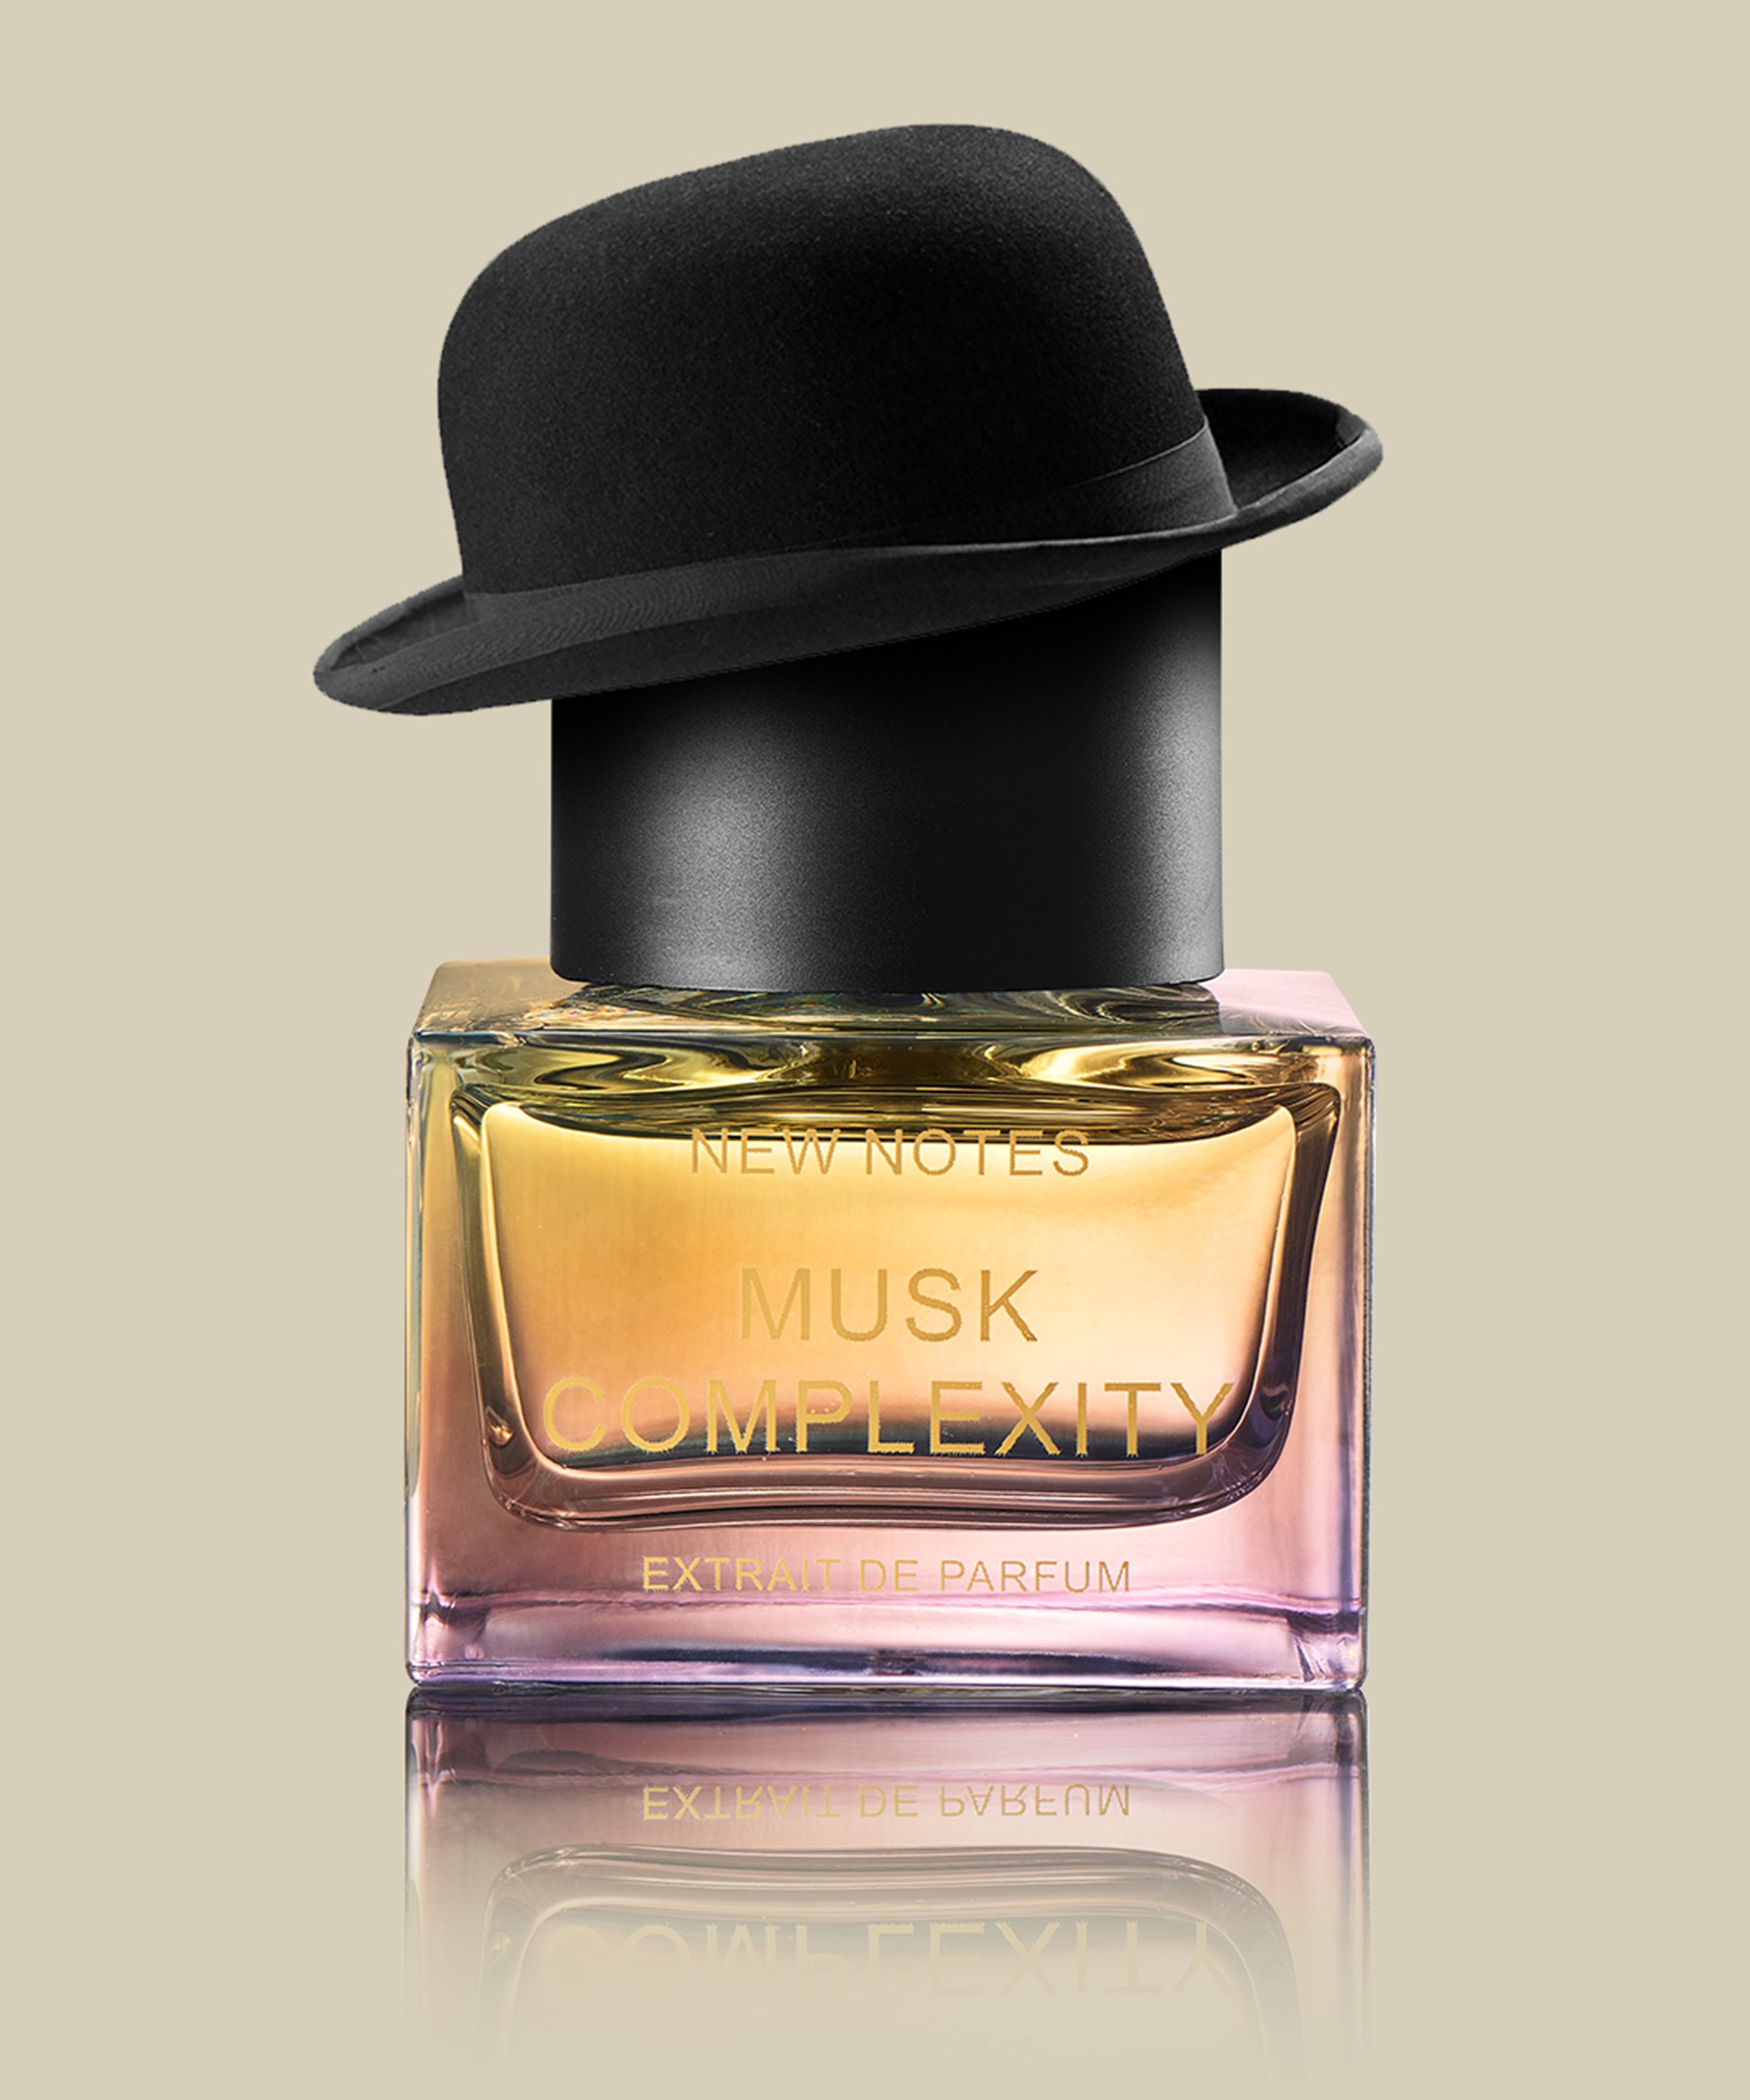 New Notes - Musk Complexity Extrait de Parfum 50ml image number 1